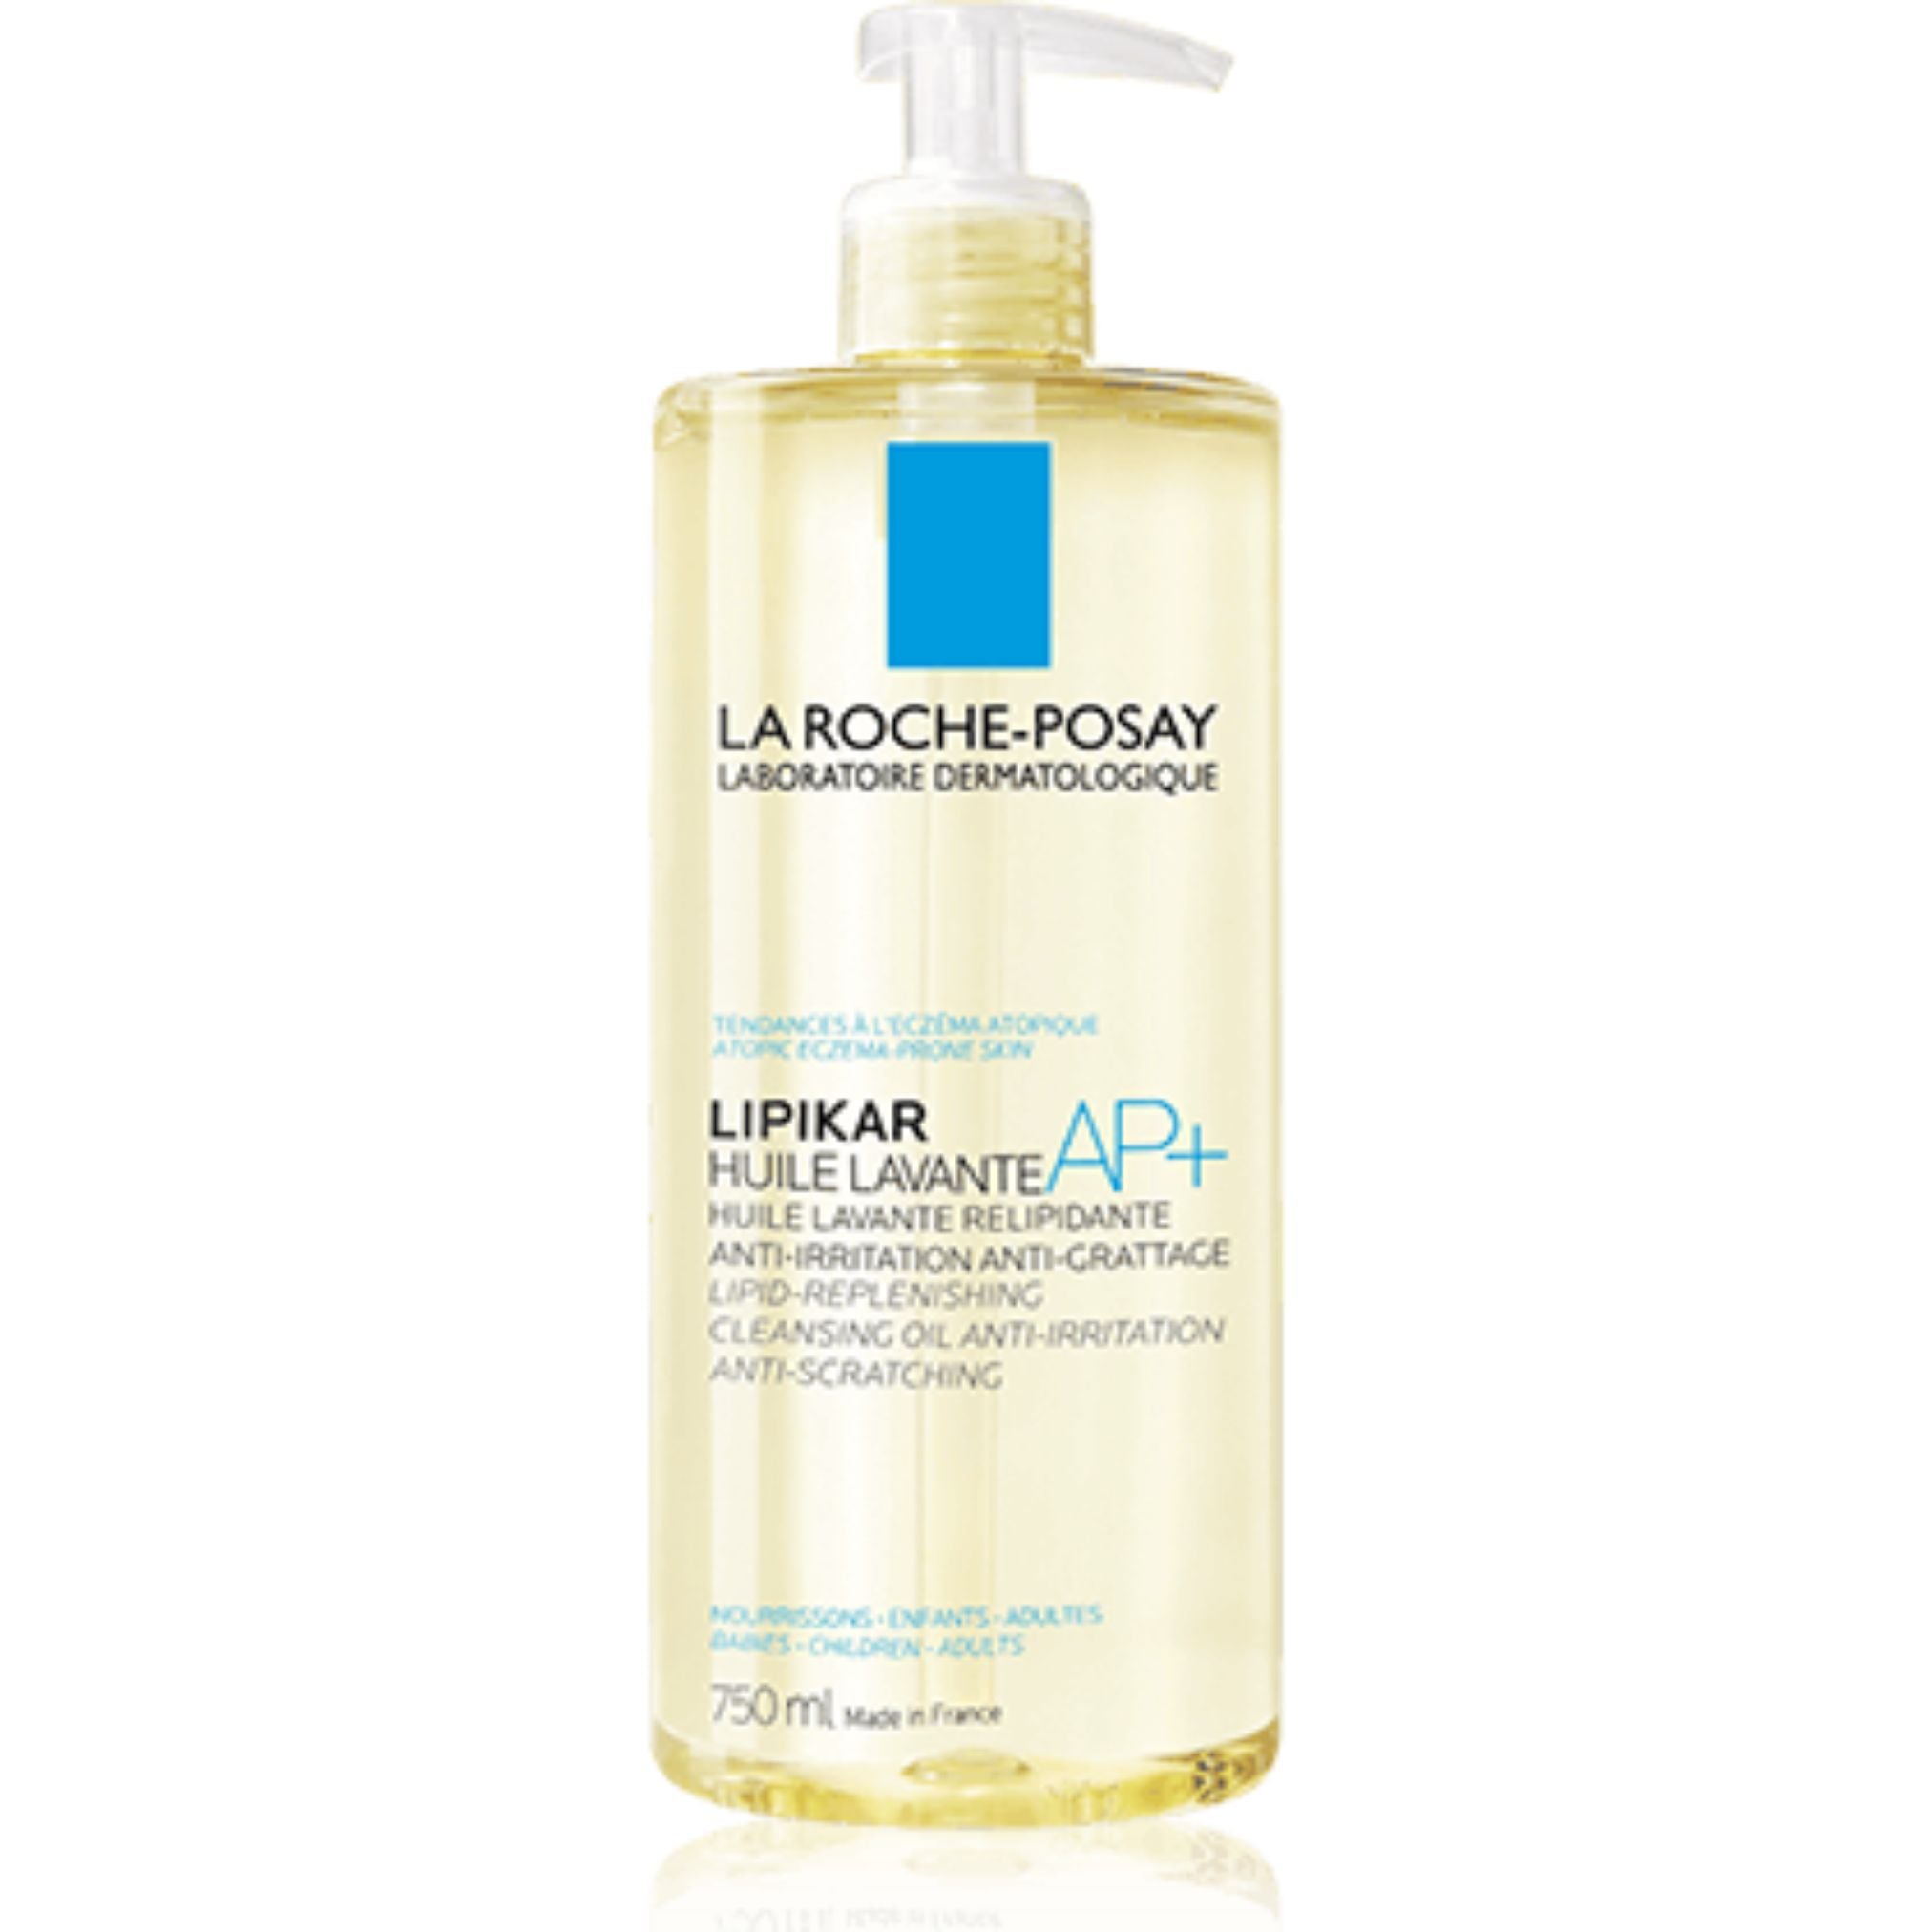 La Roche-Posay Lipikar AP+ Cleansing Oil 750ml